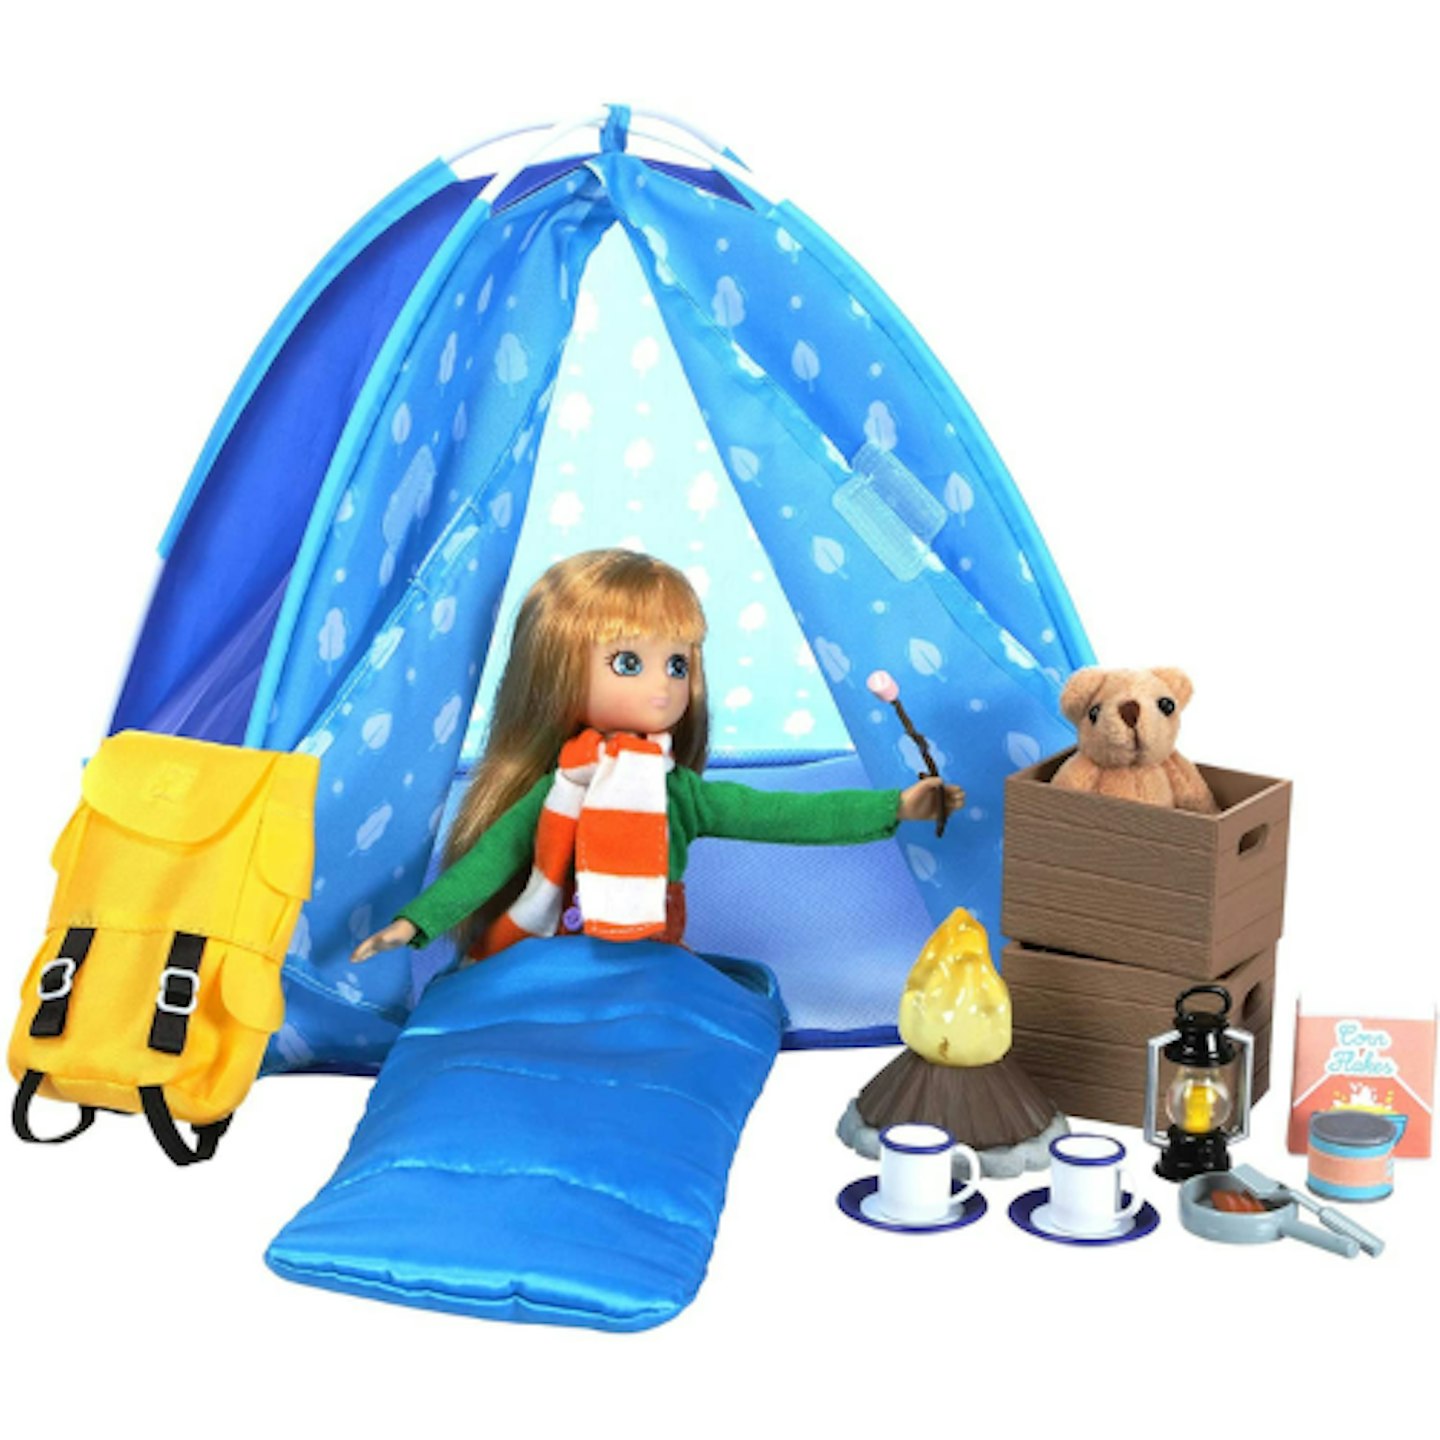 Lottie Dolls Camping Playset